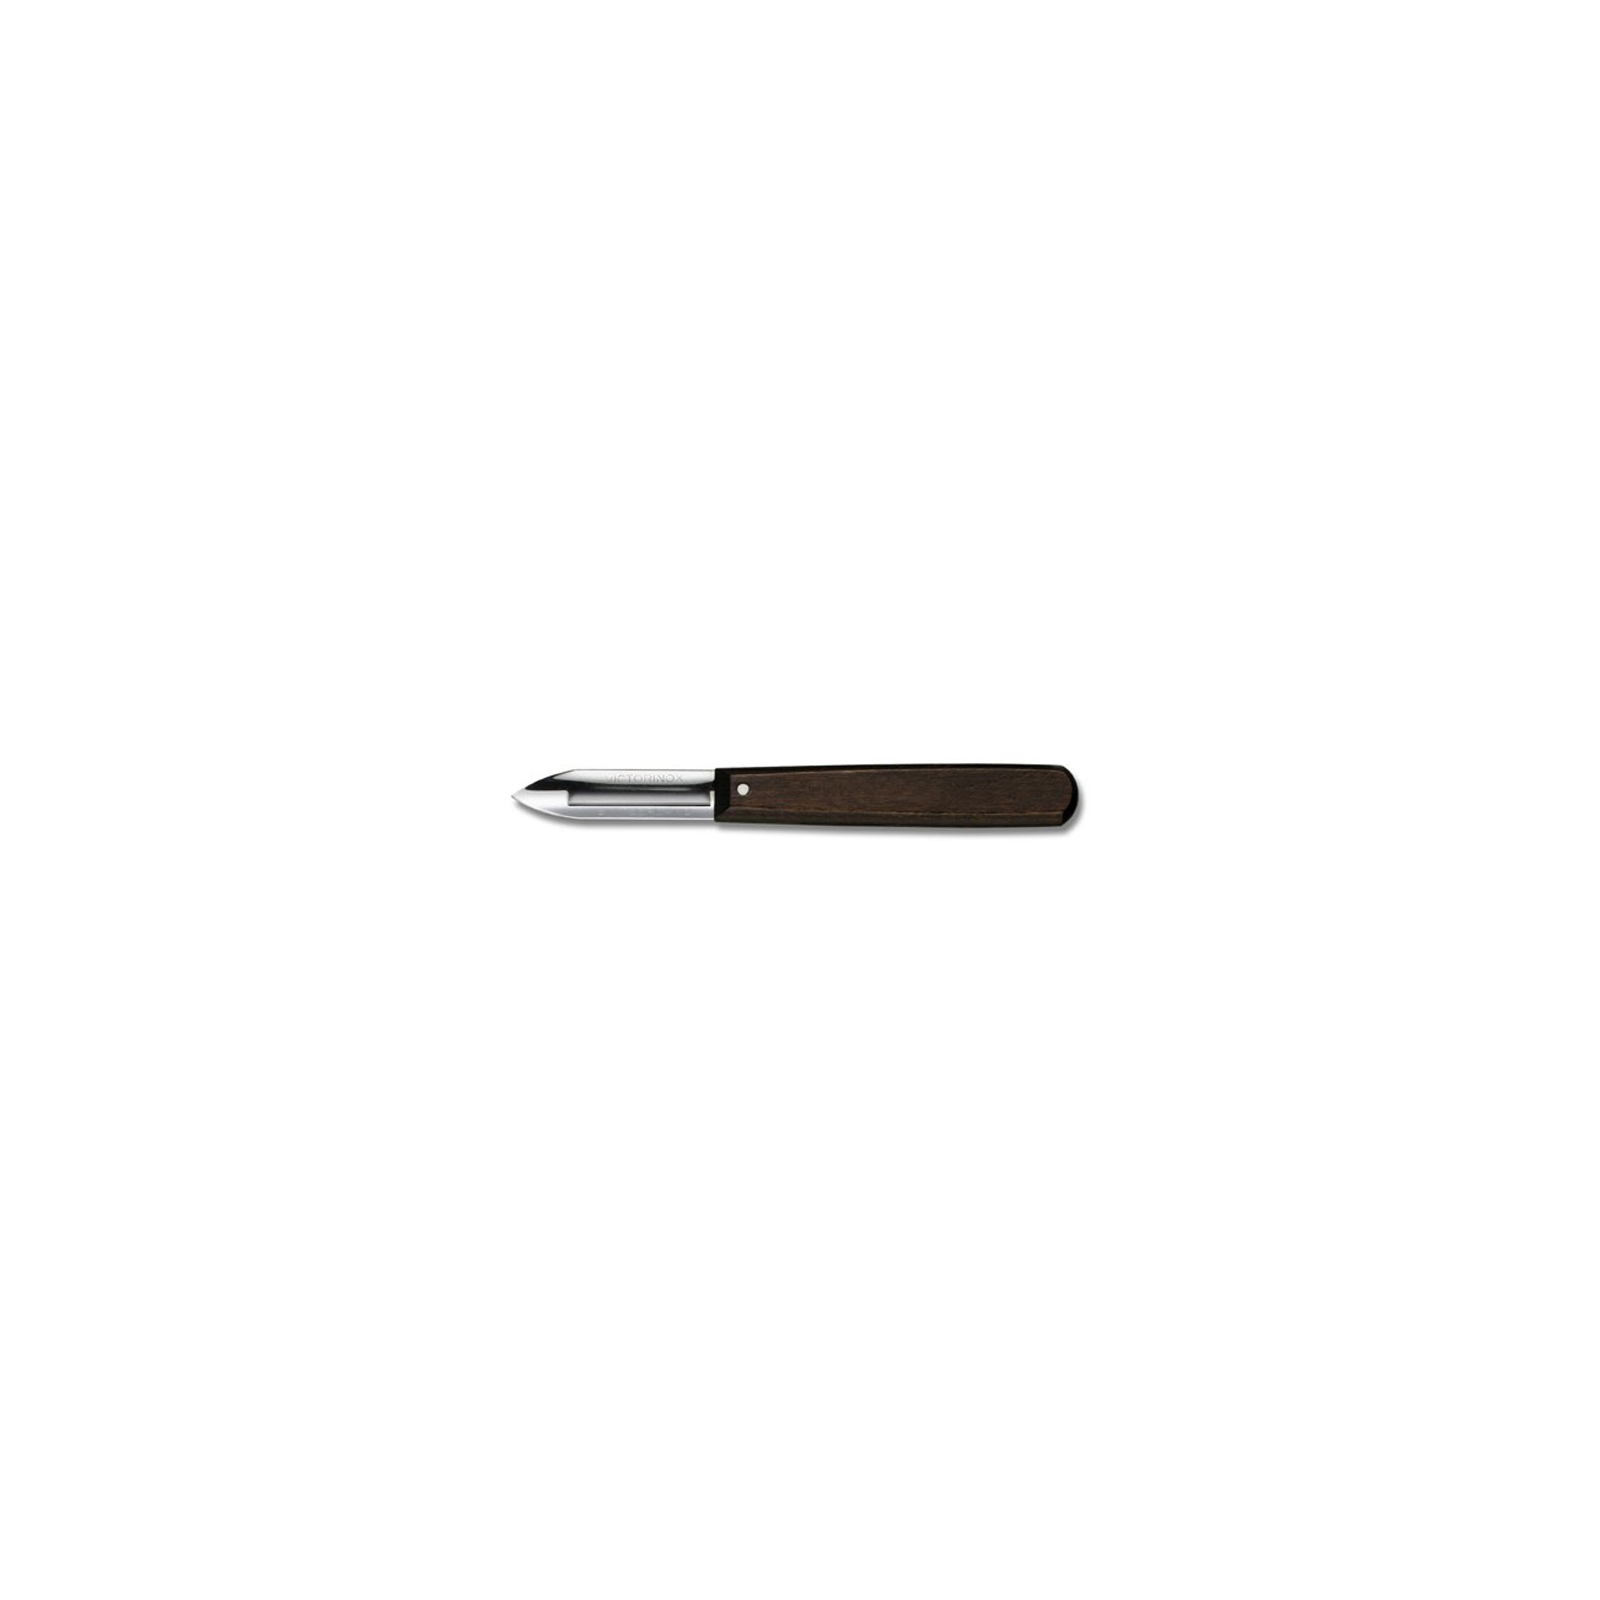 Овощечистка Victorinox 158 мм, деревянная ручка (5.0109)